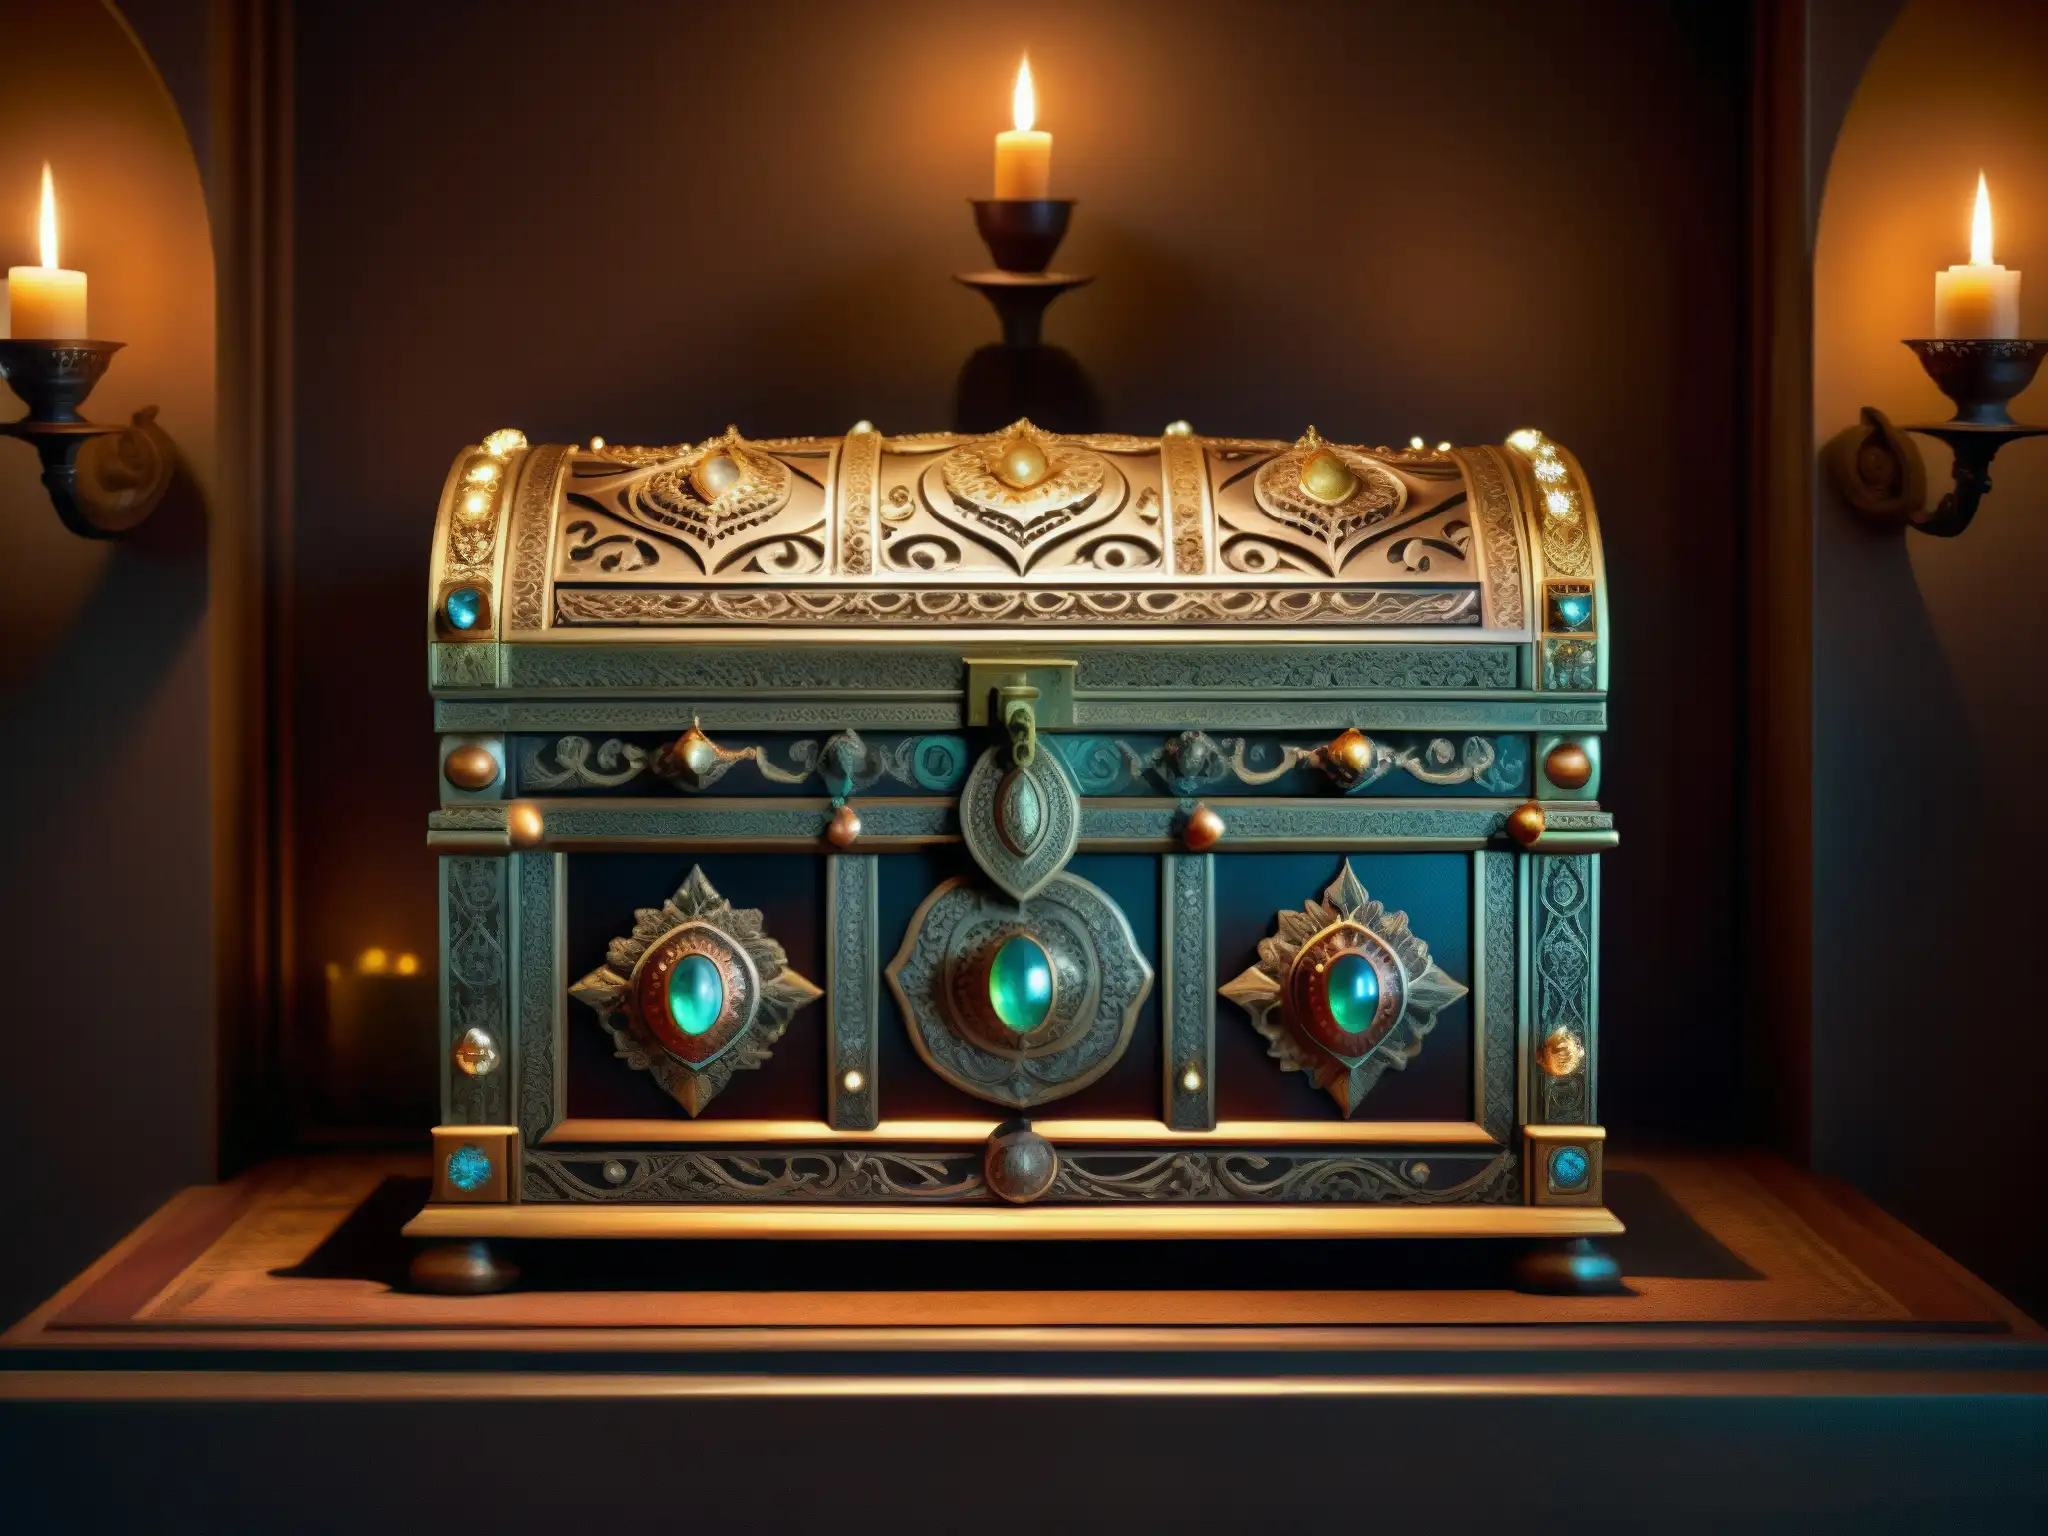 Antiguo cofre adornado con joyas en misteriosa habitación iluminada por velas